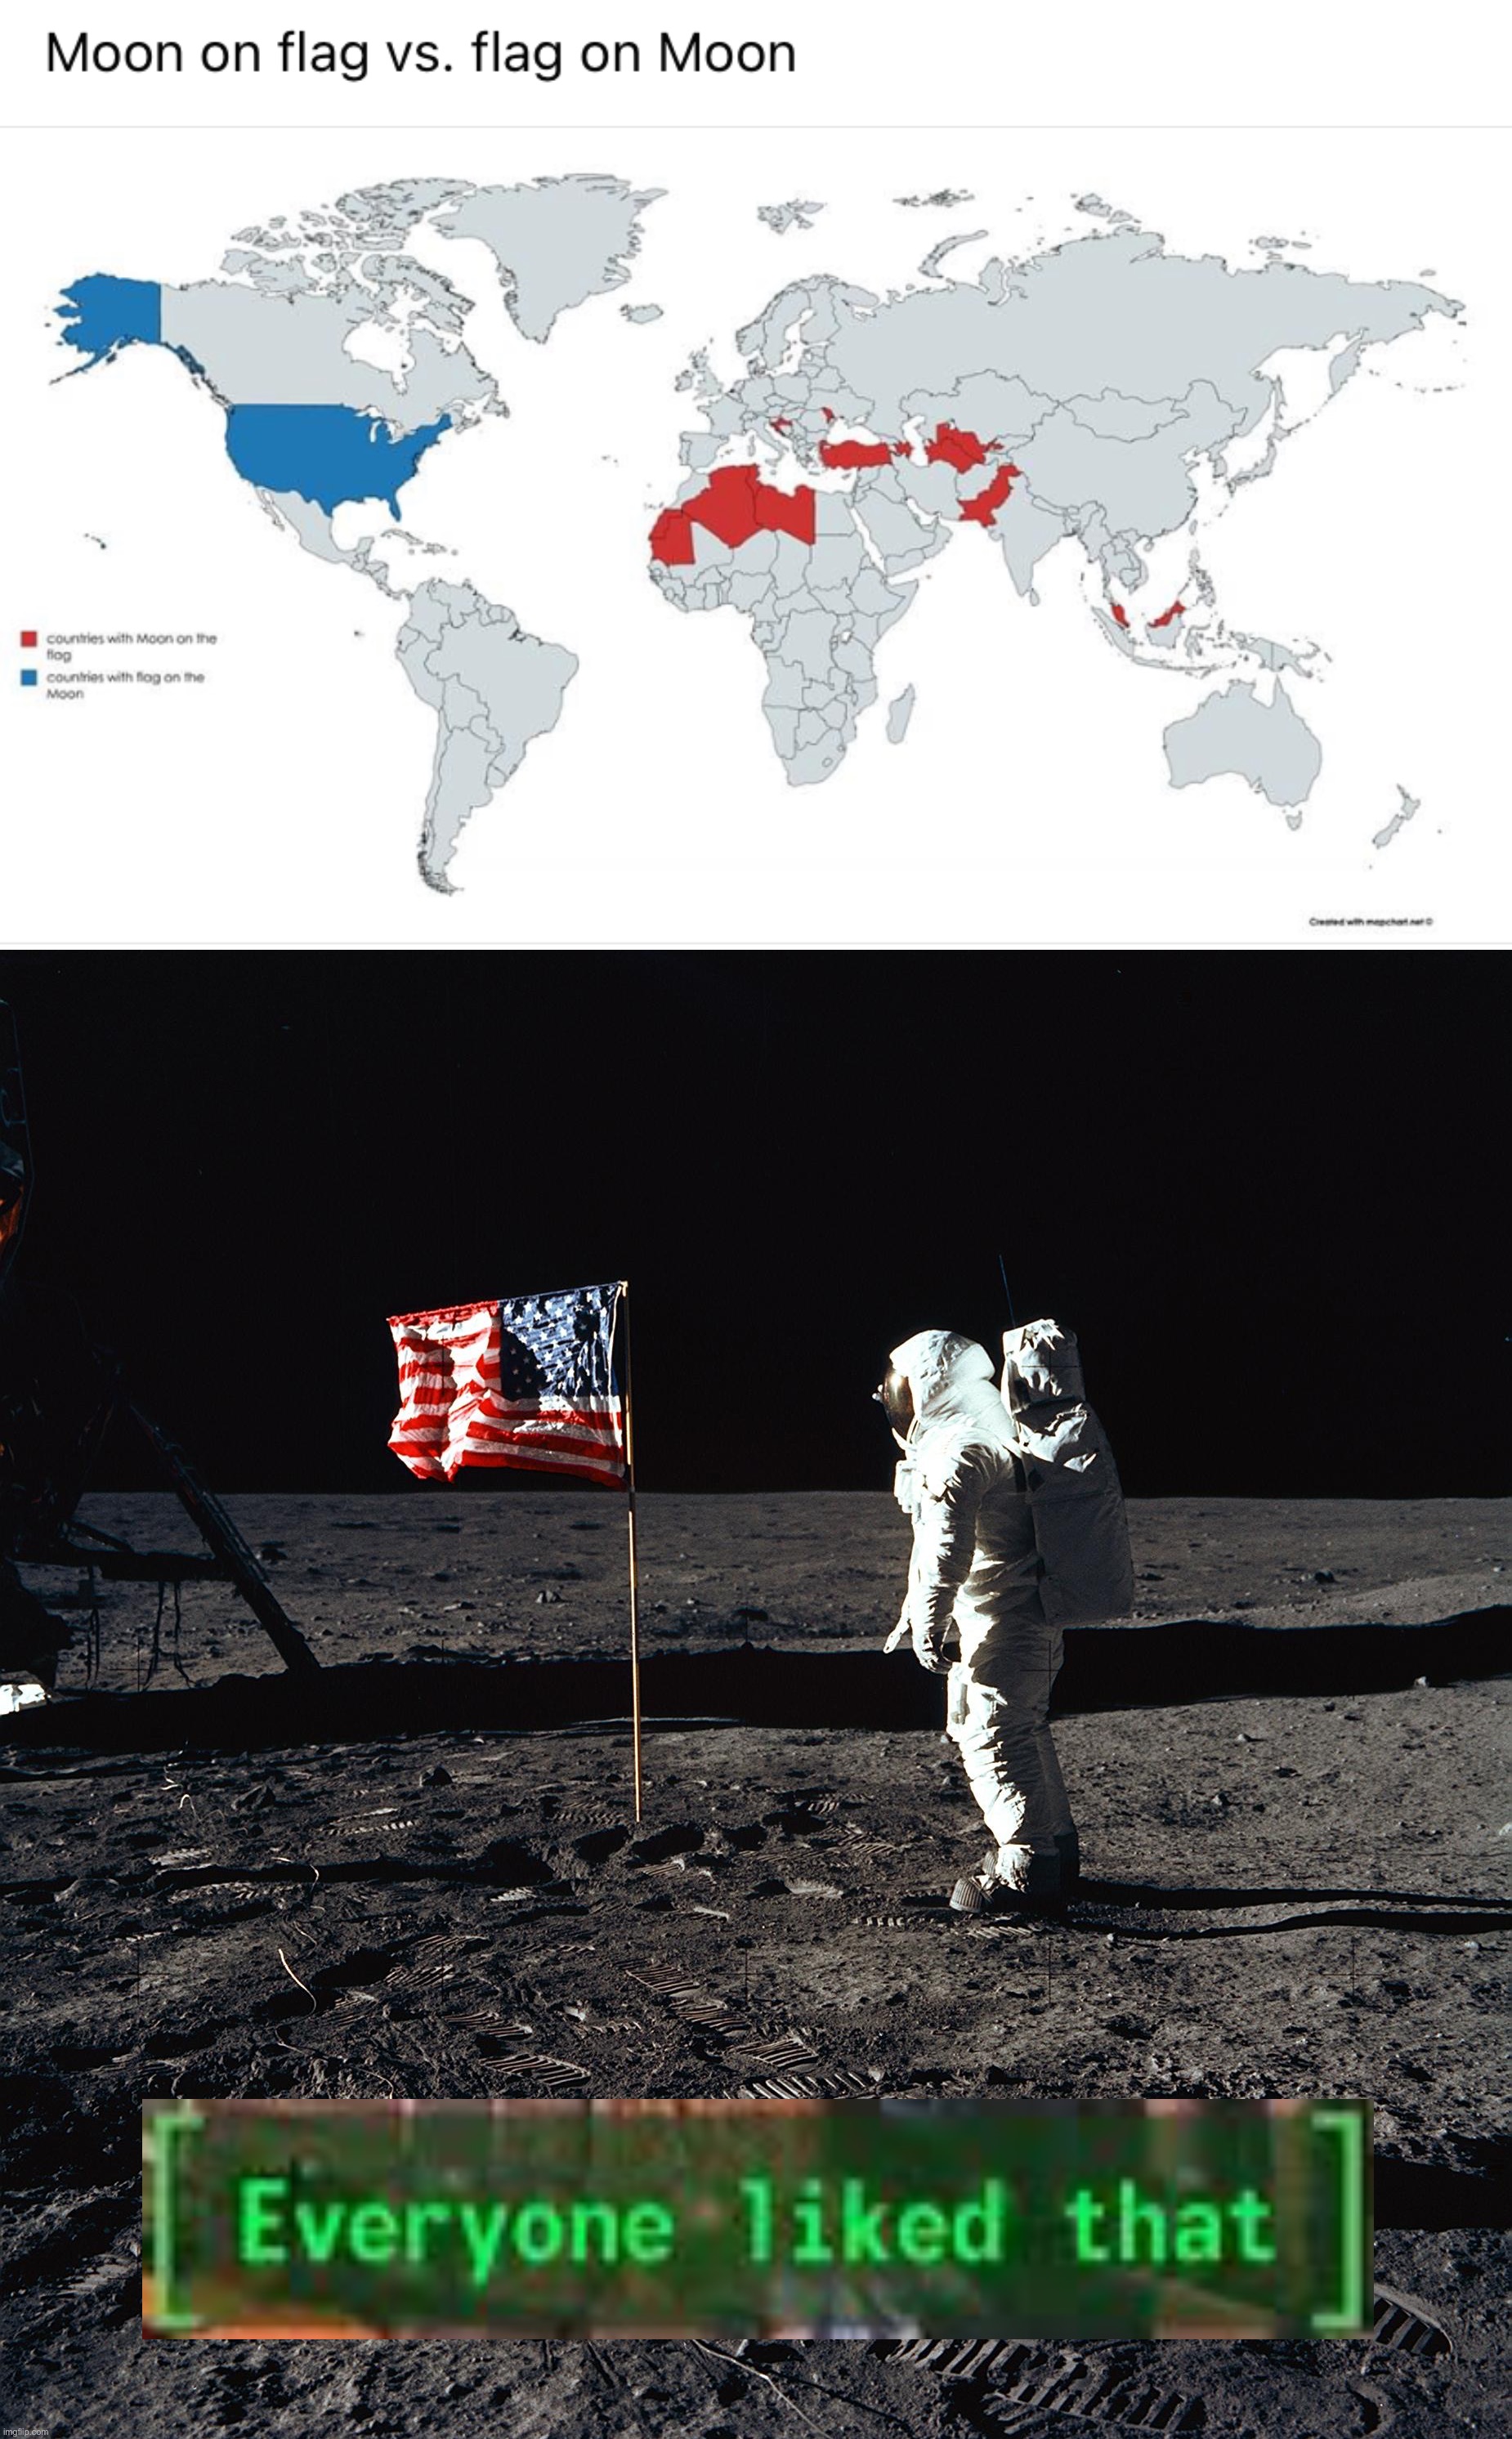 image-tagged-in-moon-on-flag-vs-flag-on-moon-usa-flag-on-moon-imgflip